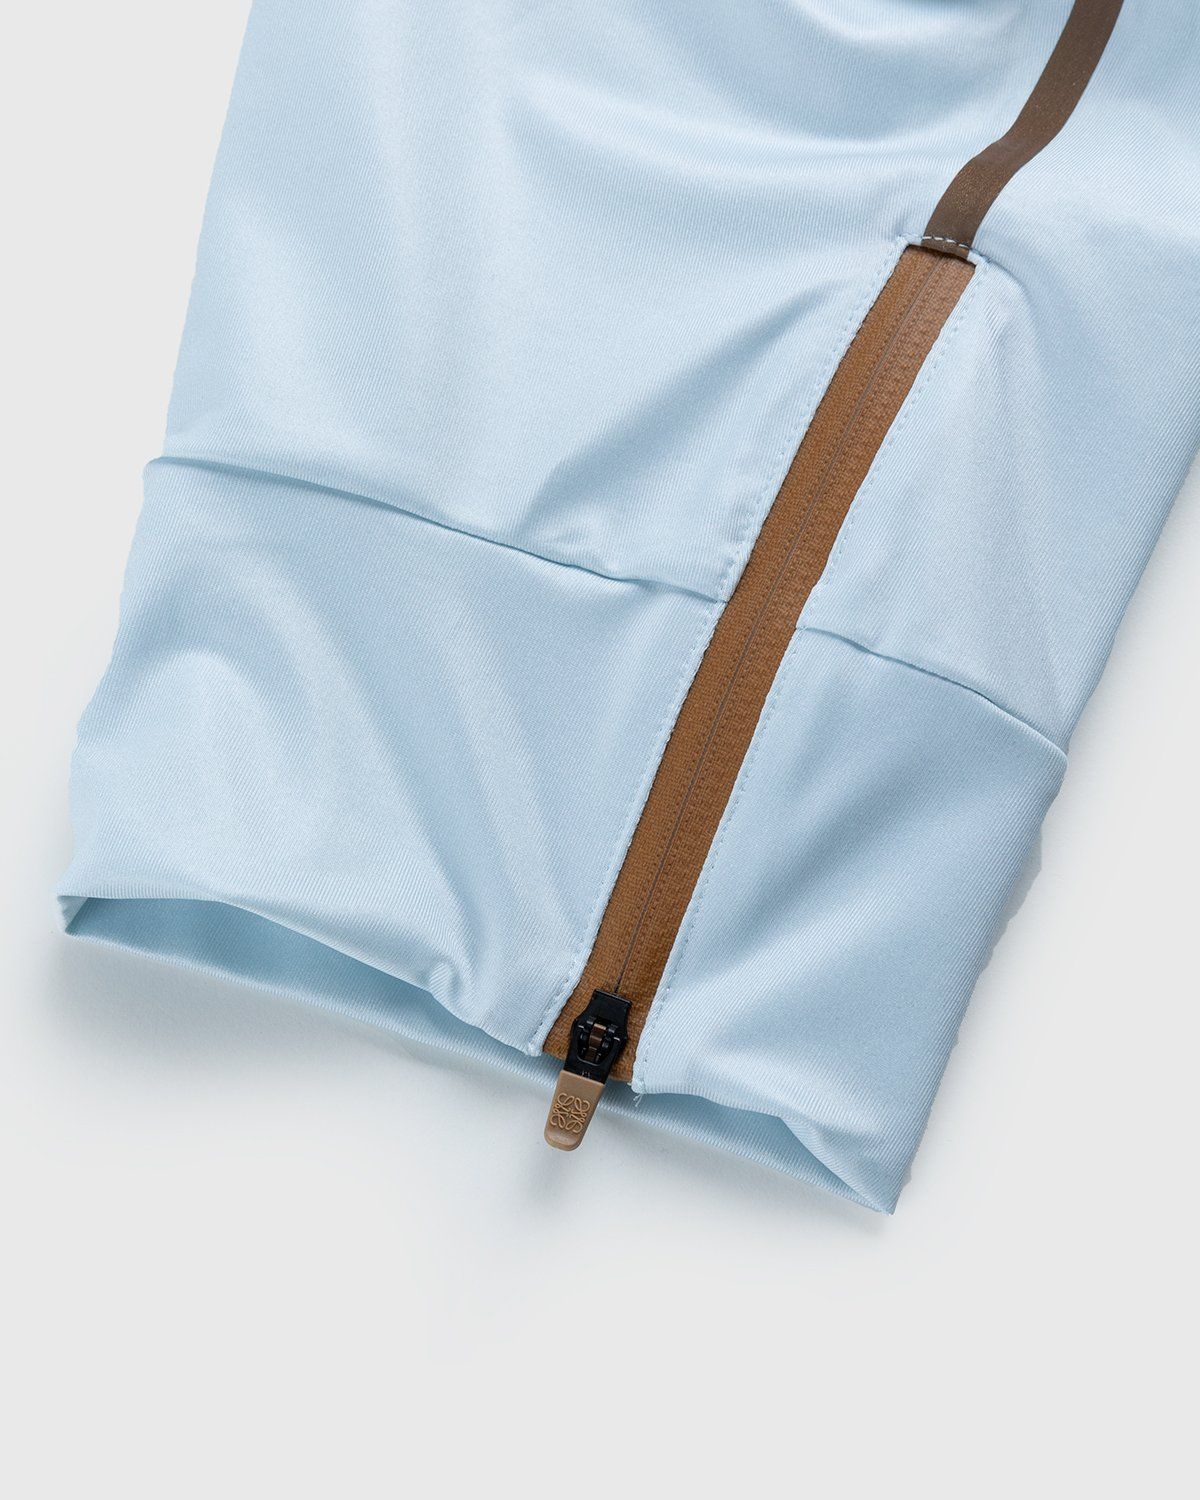 Loewe x On – Men's Technical Running Pants Gradient Grey - Pants - Blue - Image 3